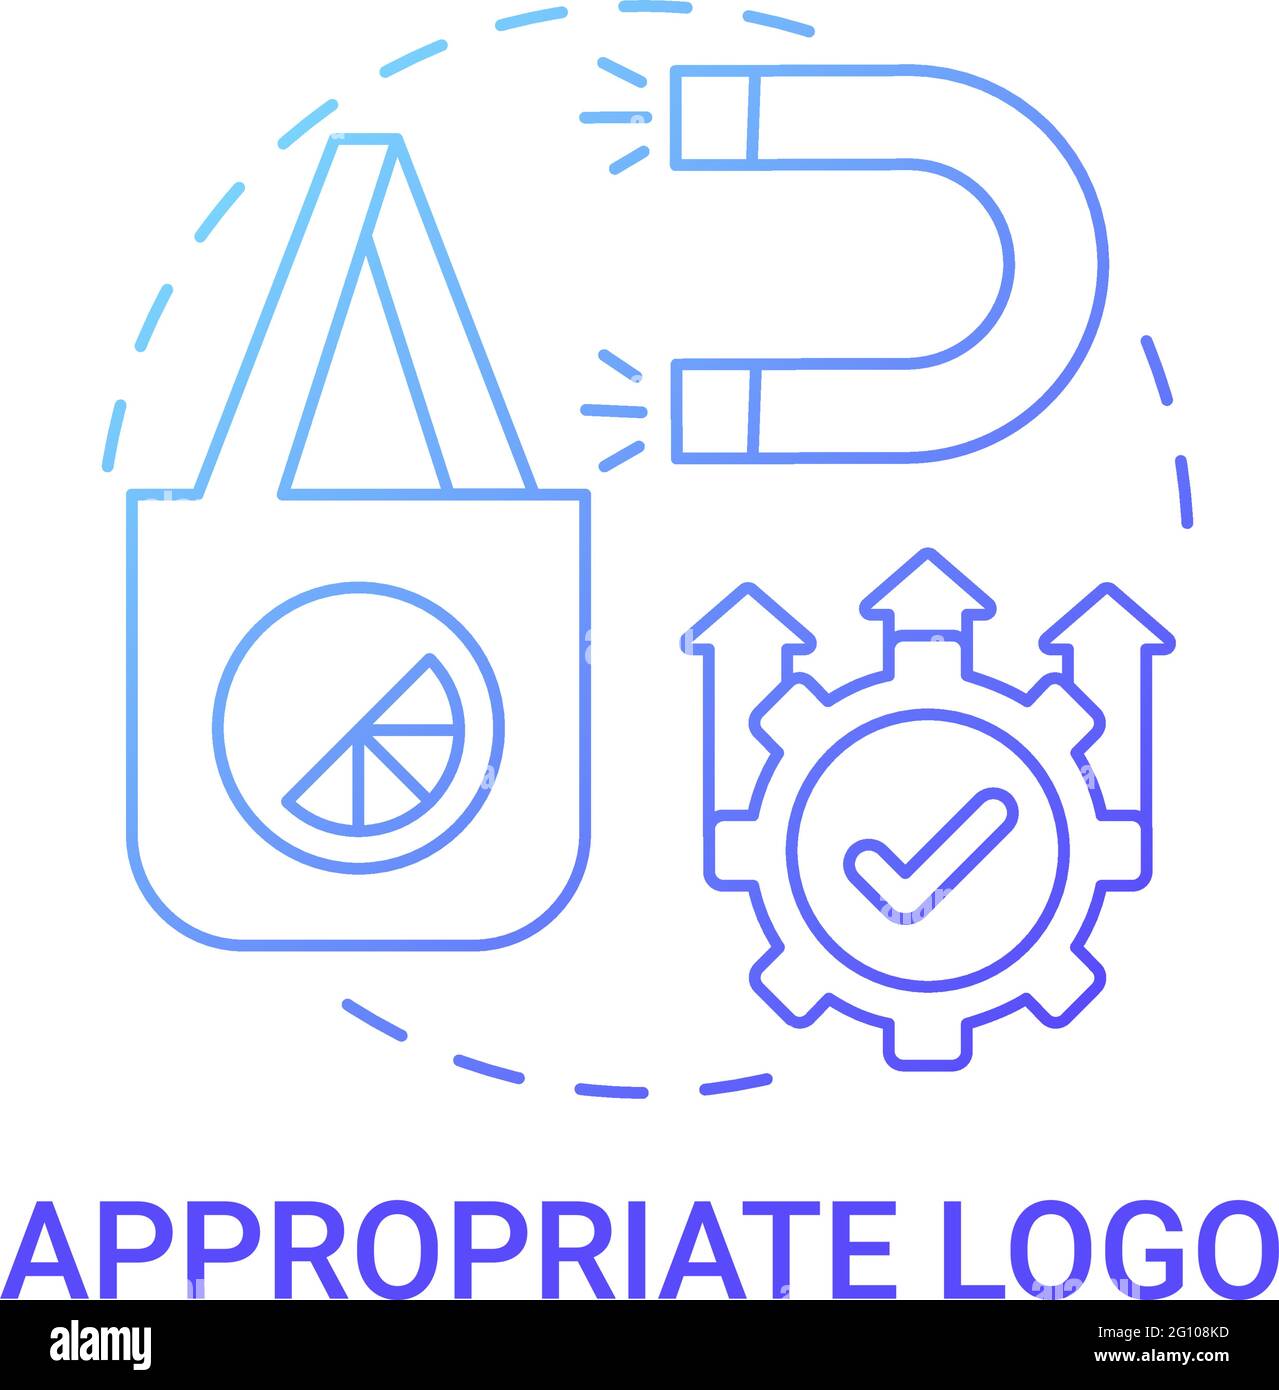 Appropriate logo concept icon Stock Vector